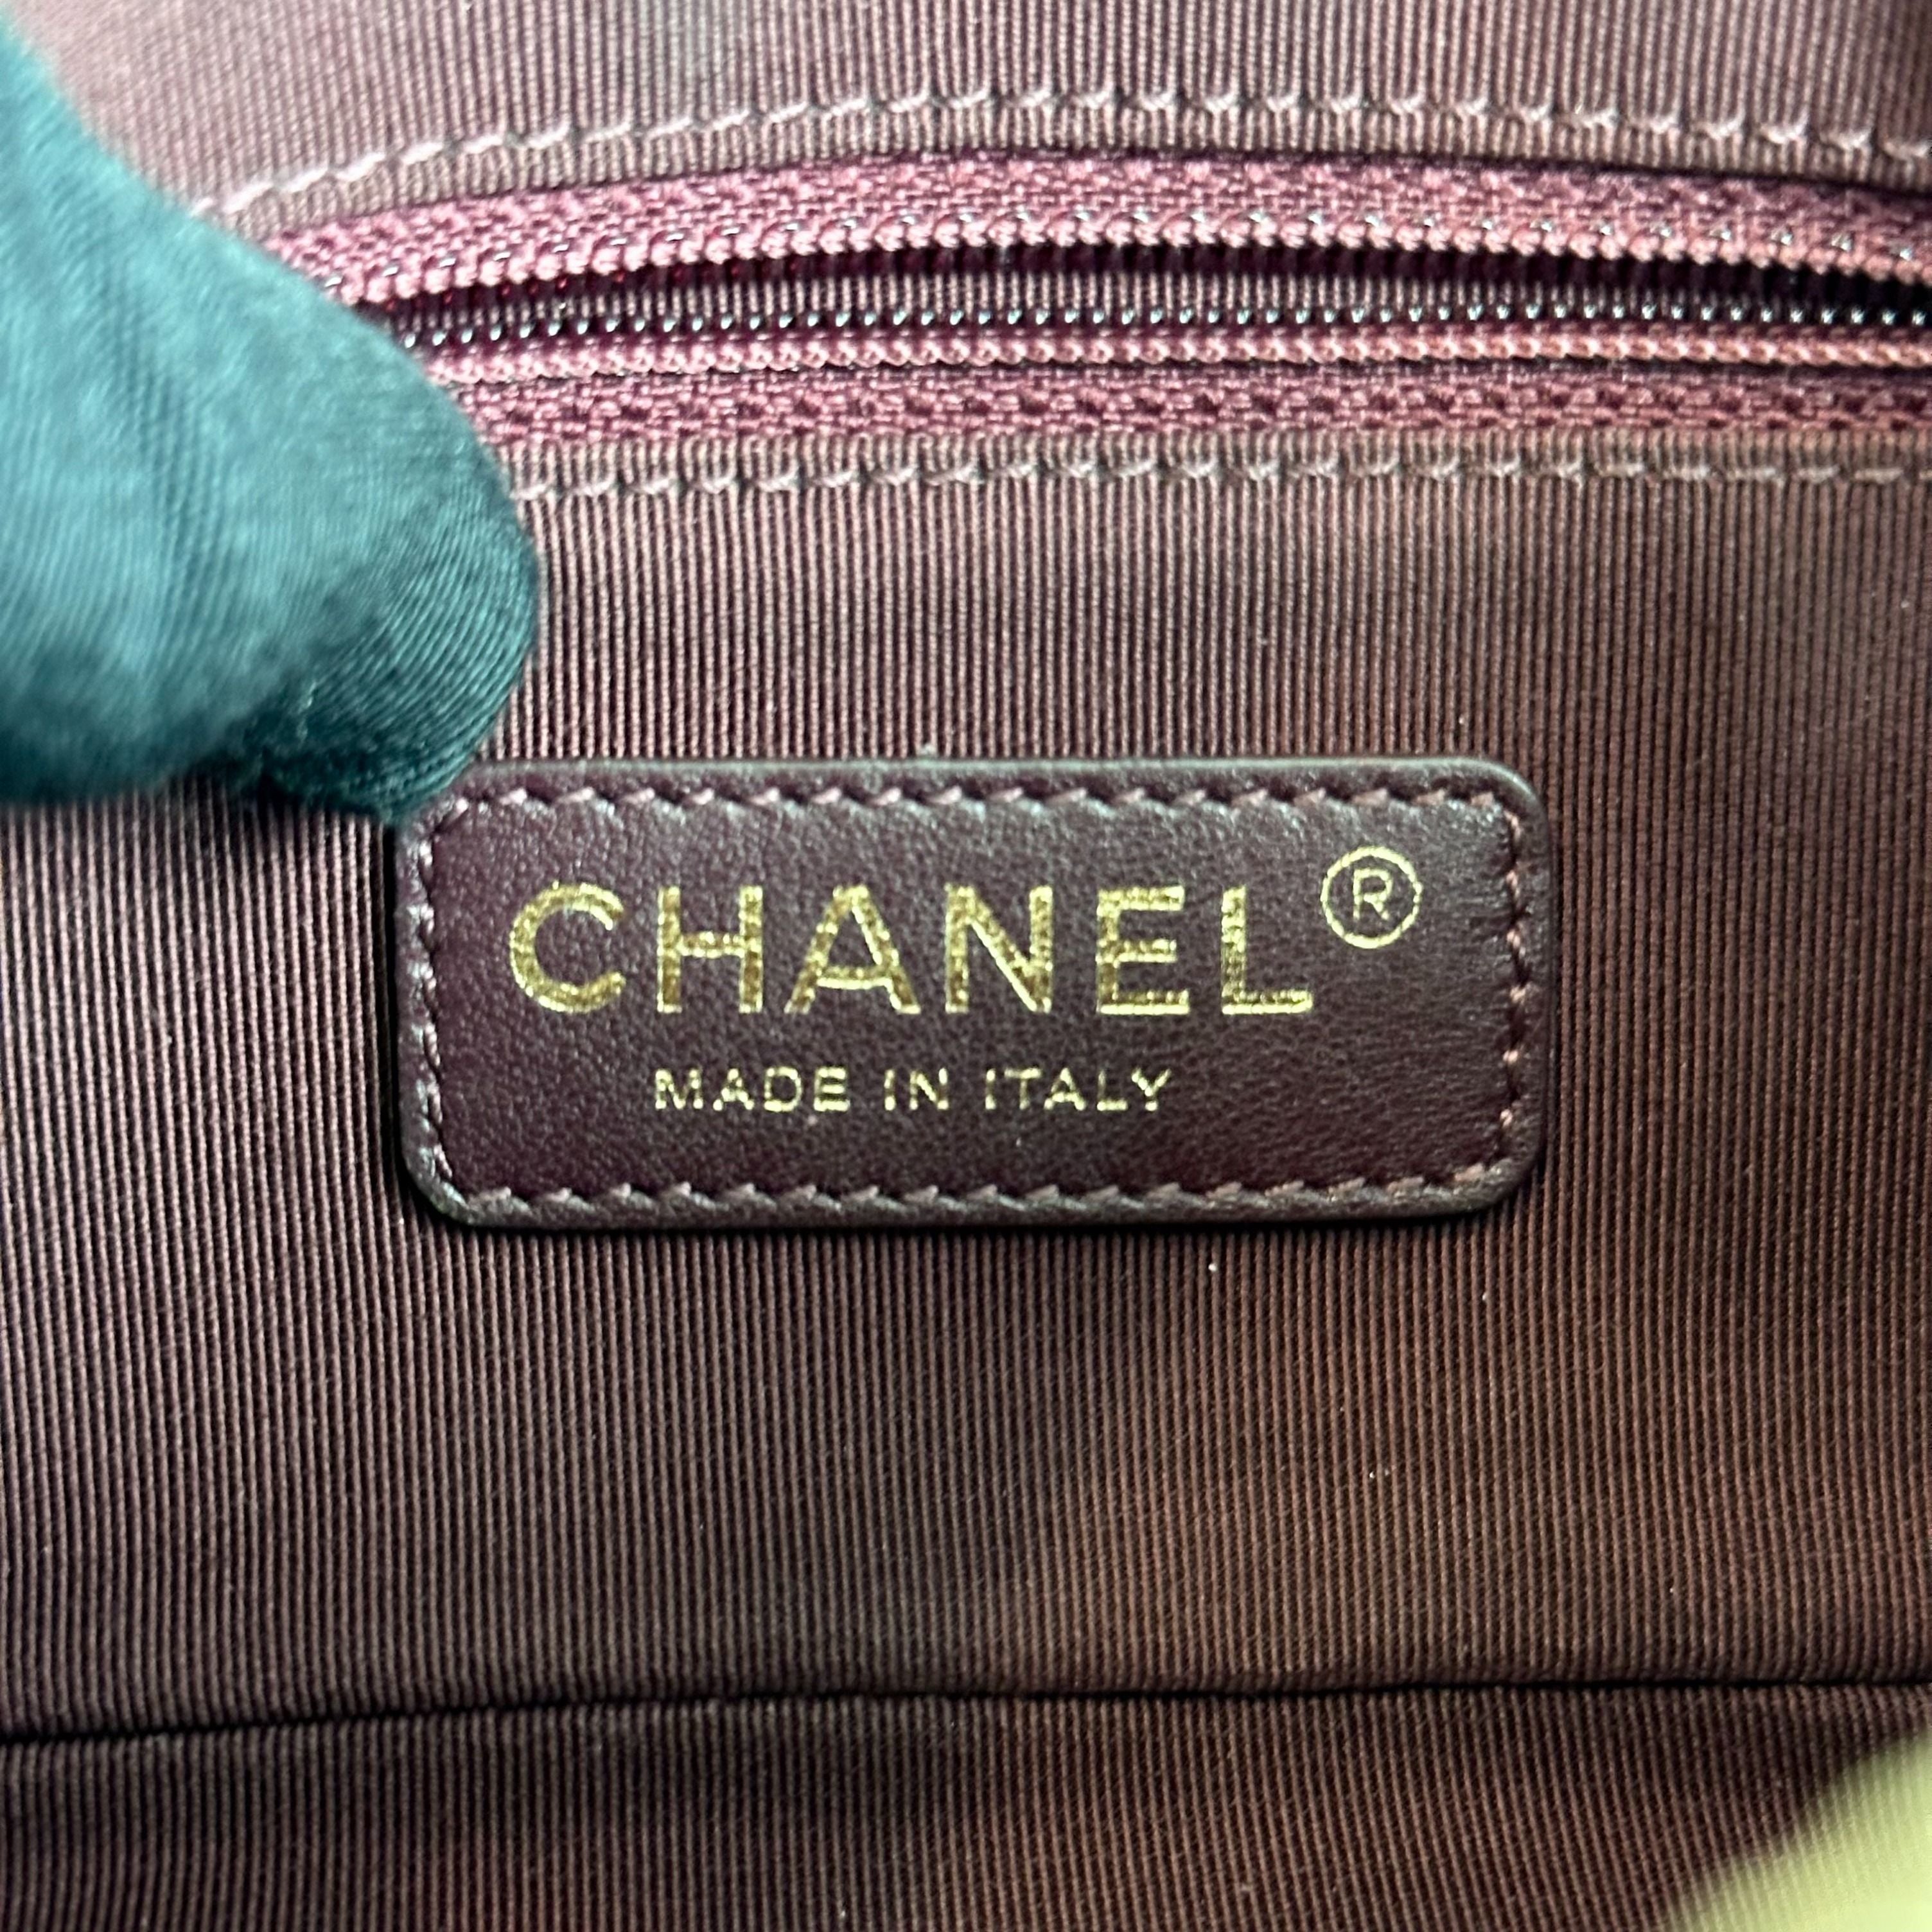 Chanel Camera Chevron Calfskin Small Black Shoulder Bag No 21